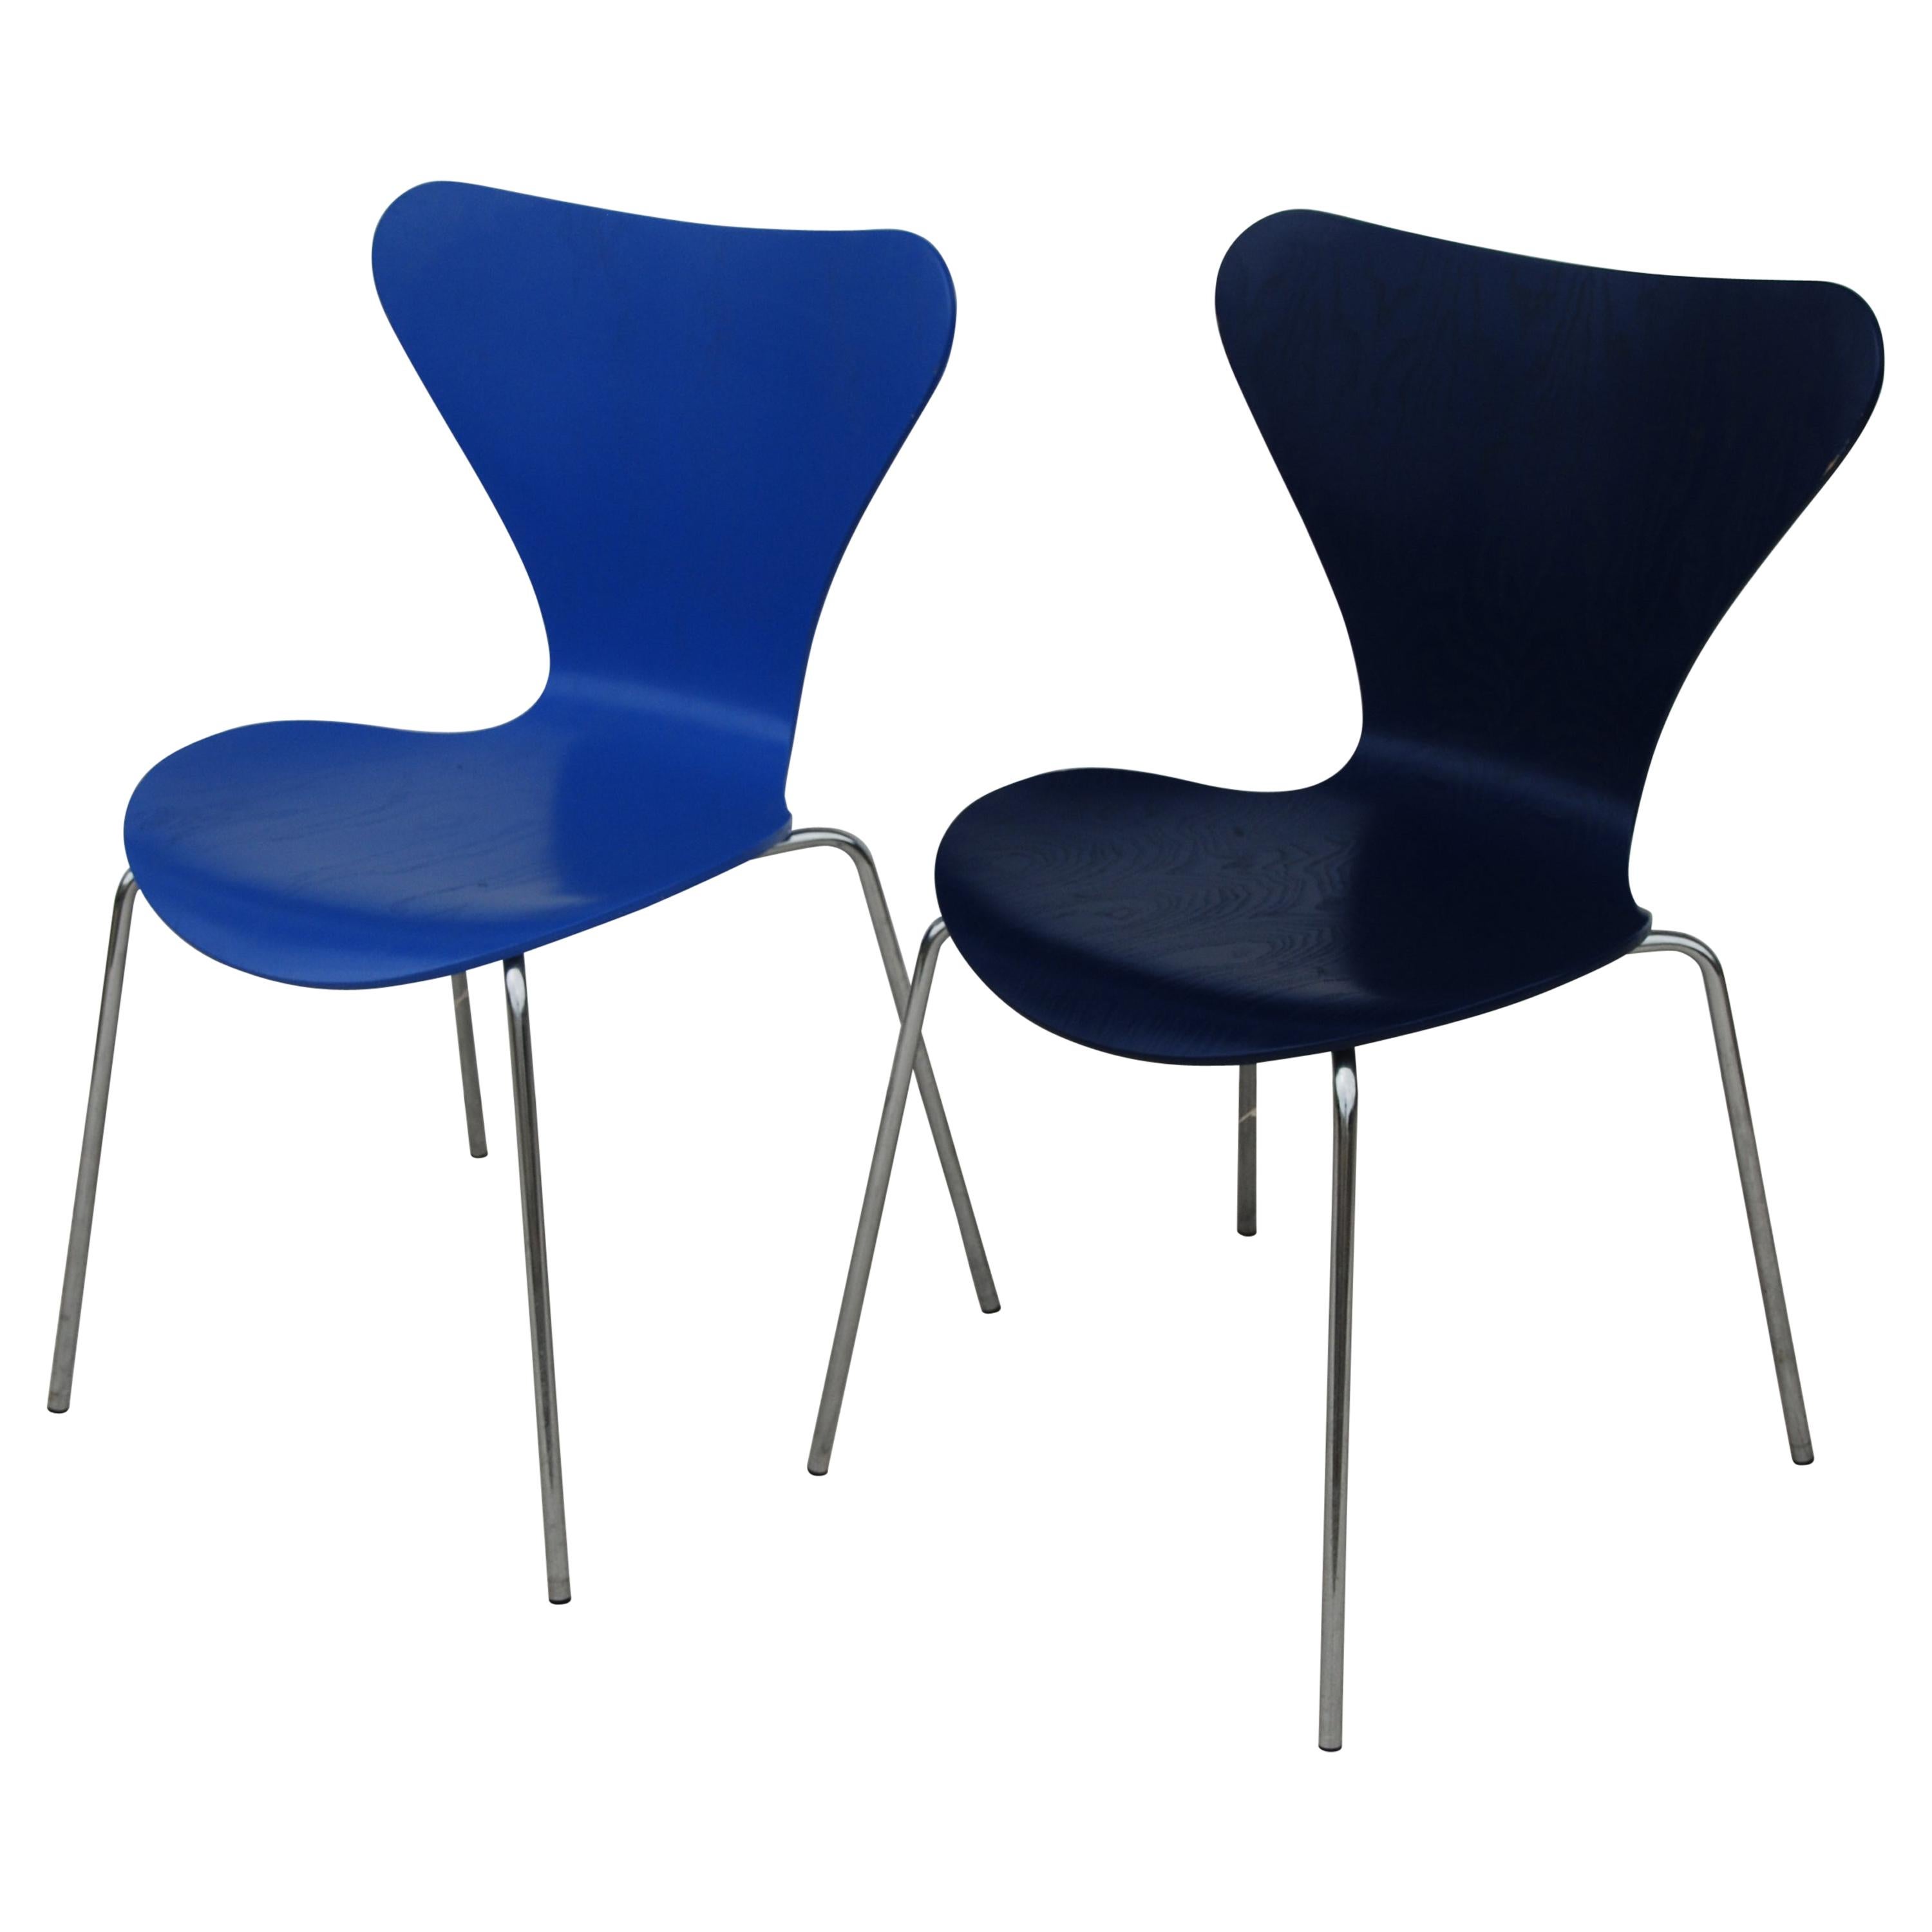 1 Vintage Series 7 Chair by Arne Jacobsen for Fritz Hansen